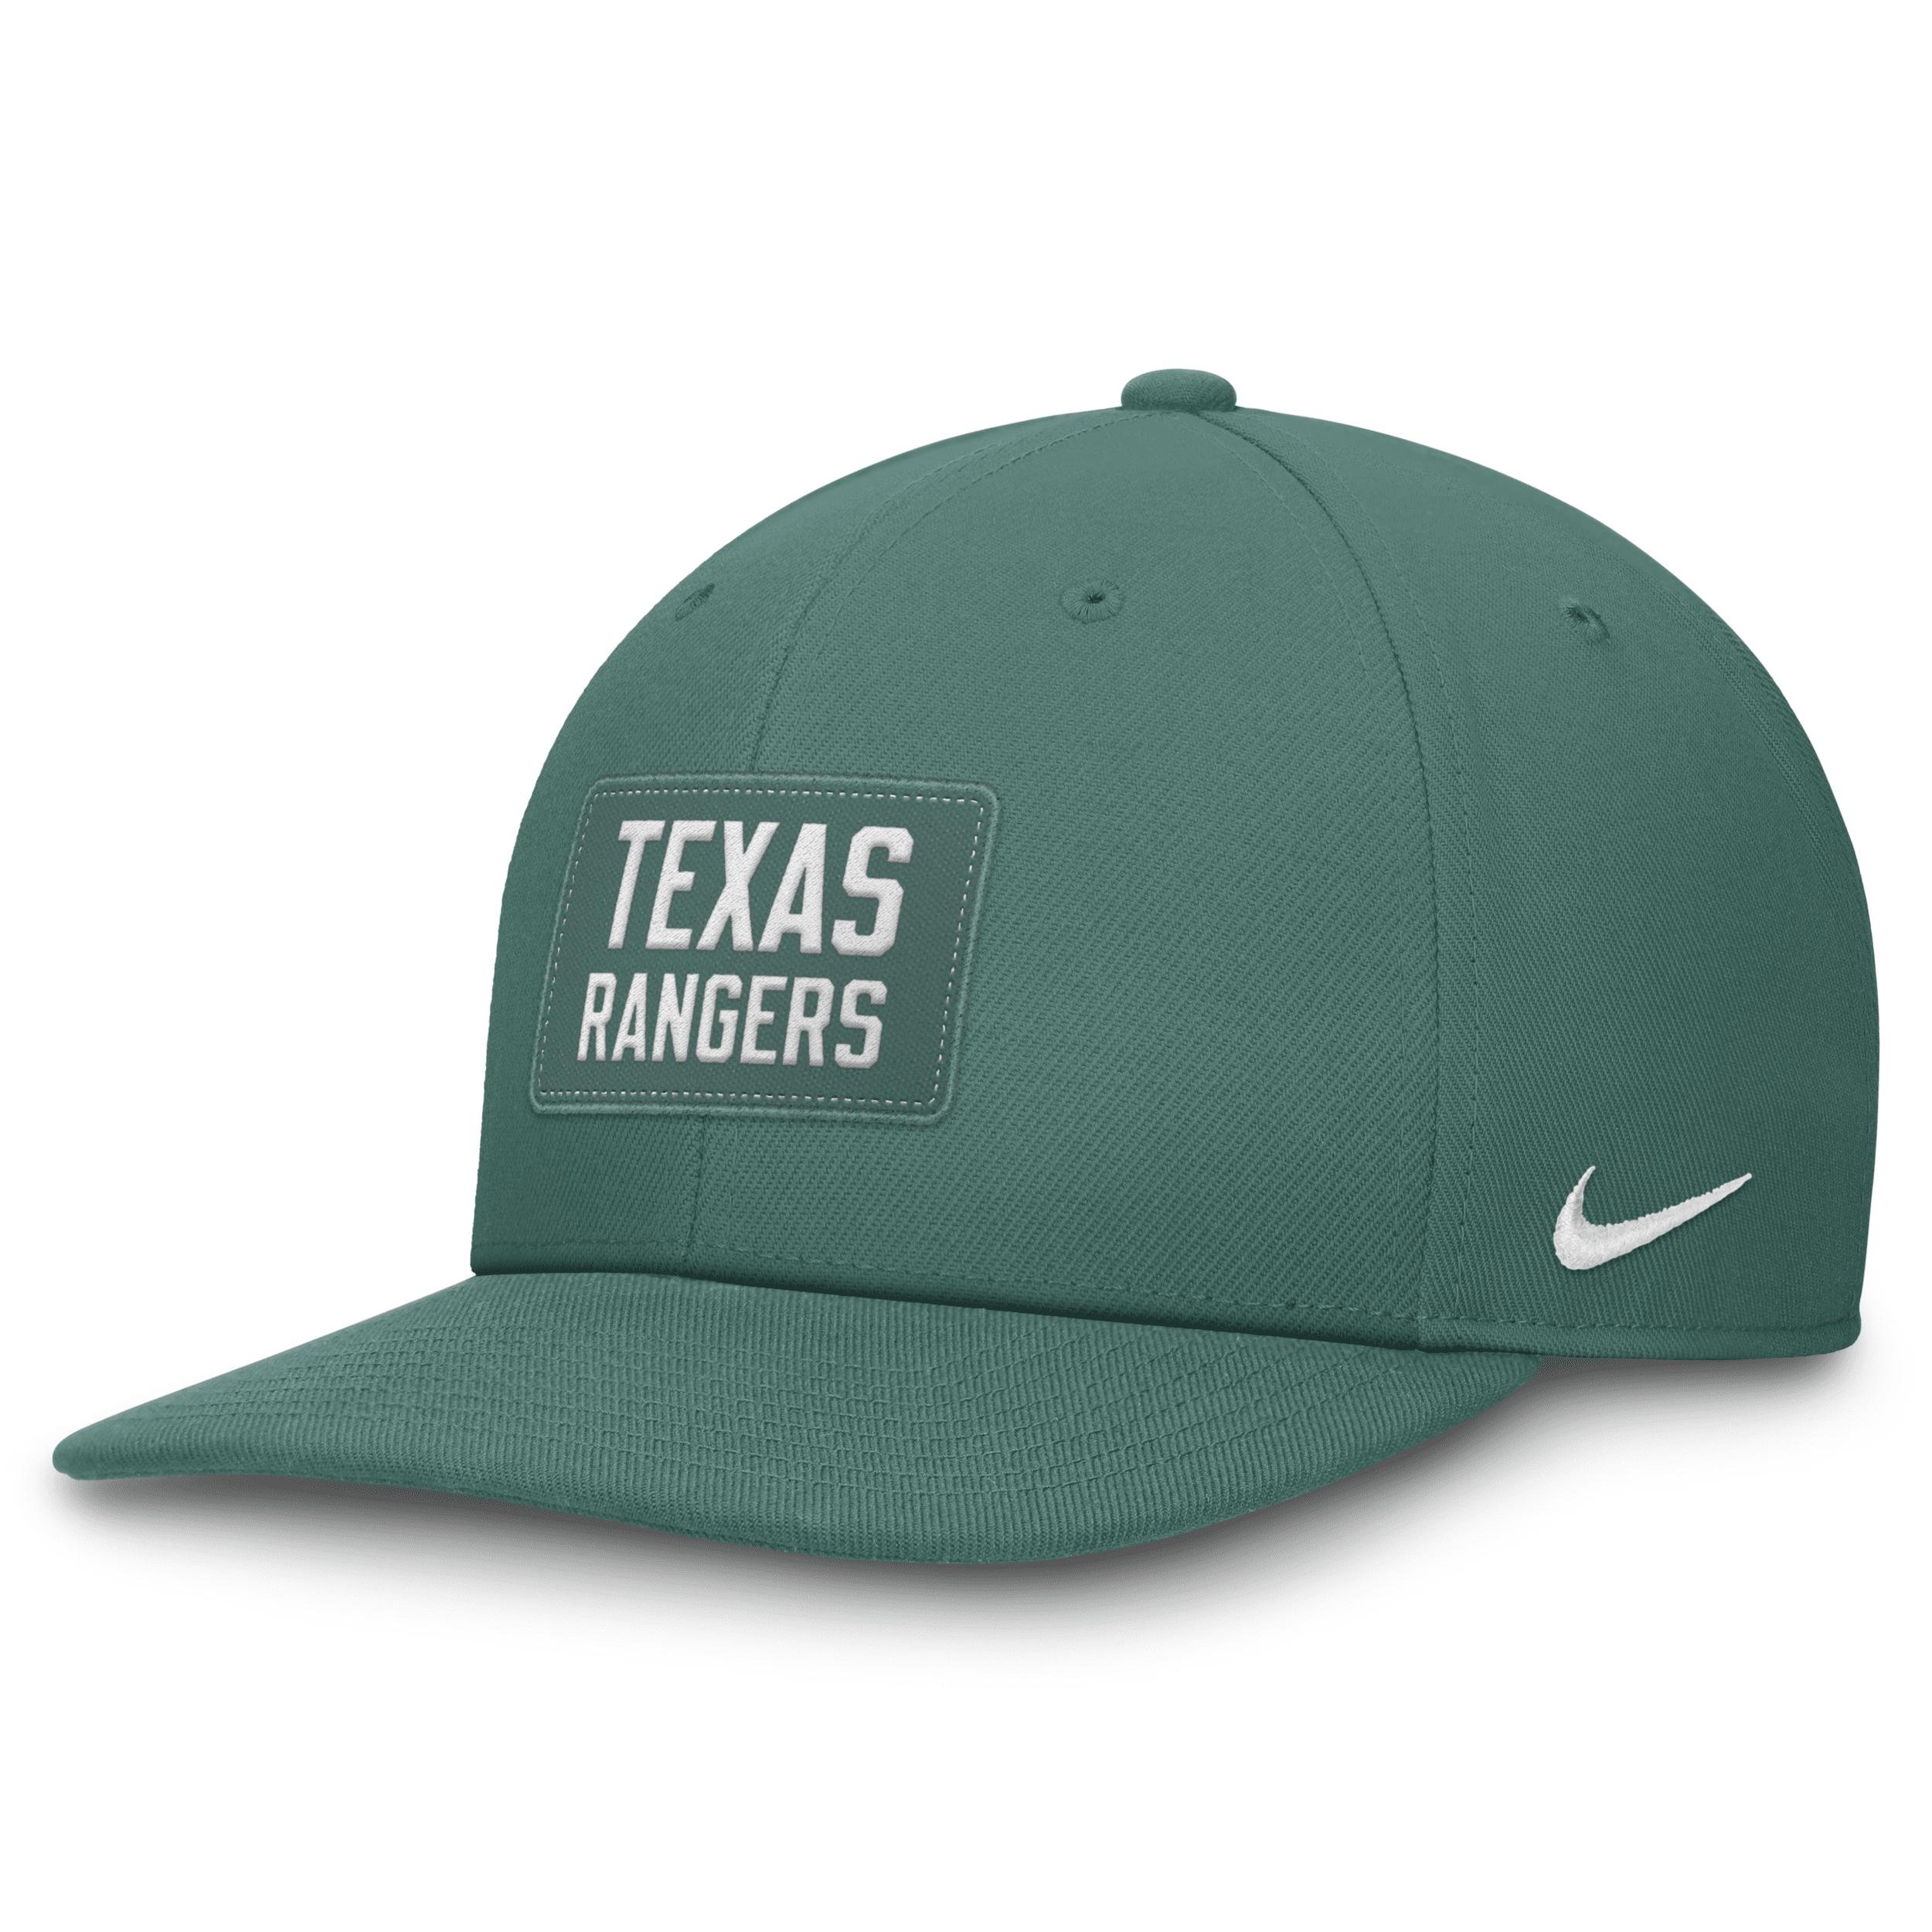 Texas Rangers Bicoastal Pro Nike Unisex Dri-FIT MLB Adjustable Hat by NIKE